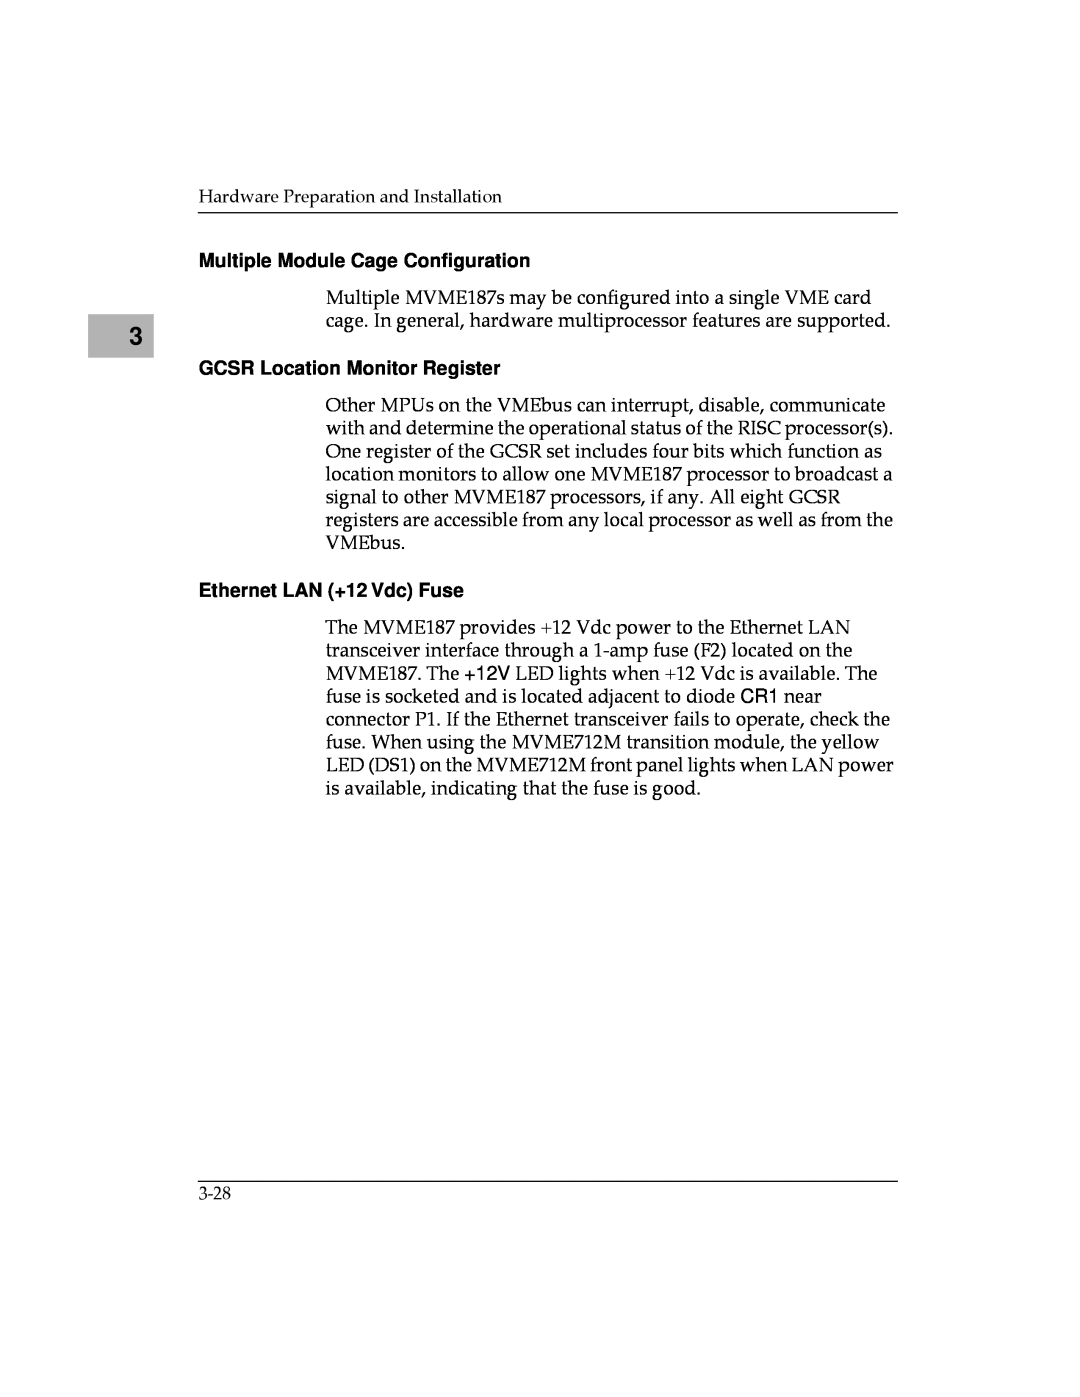 Motorola MVME187 manual Multiple Module Cage Conﬁguration, GCSR Location Monitor Register, Ethernet LAN +12 Vdc Fuse 